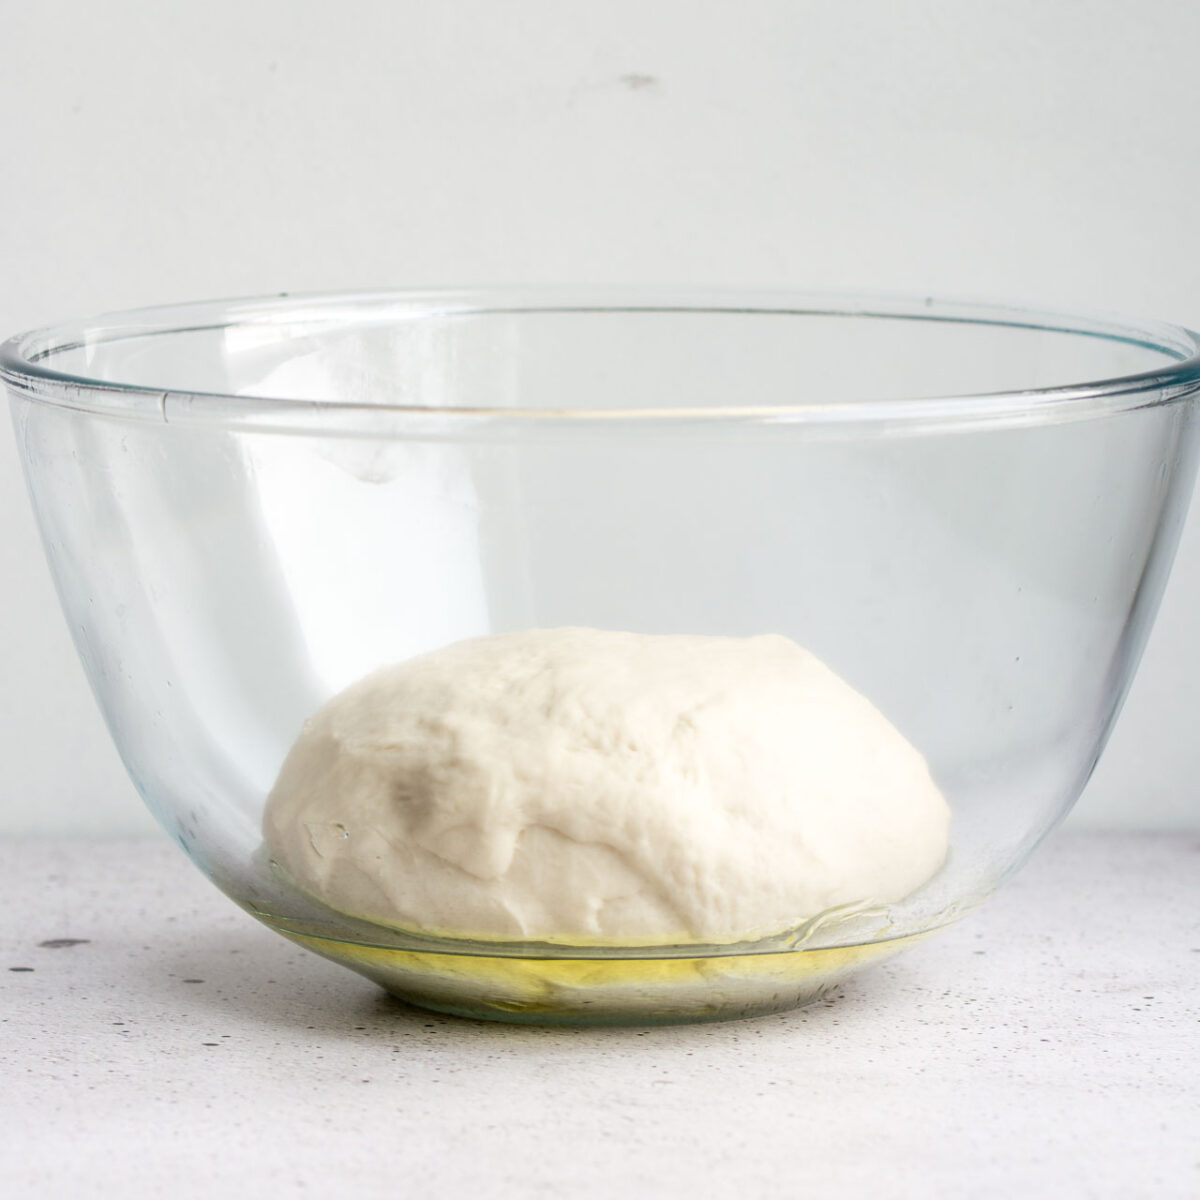 Dough mixture in a mixing bowl.